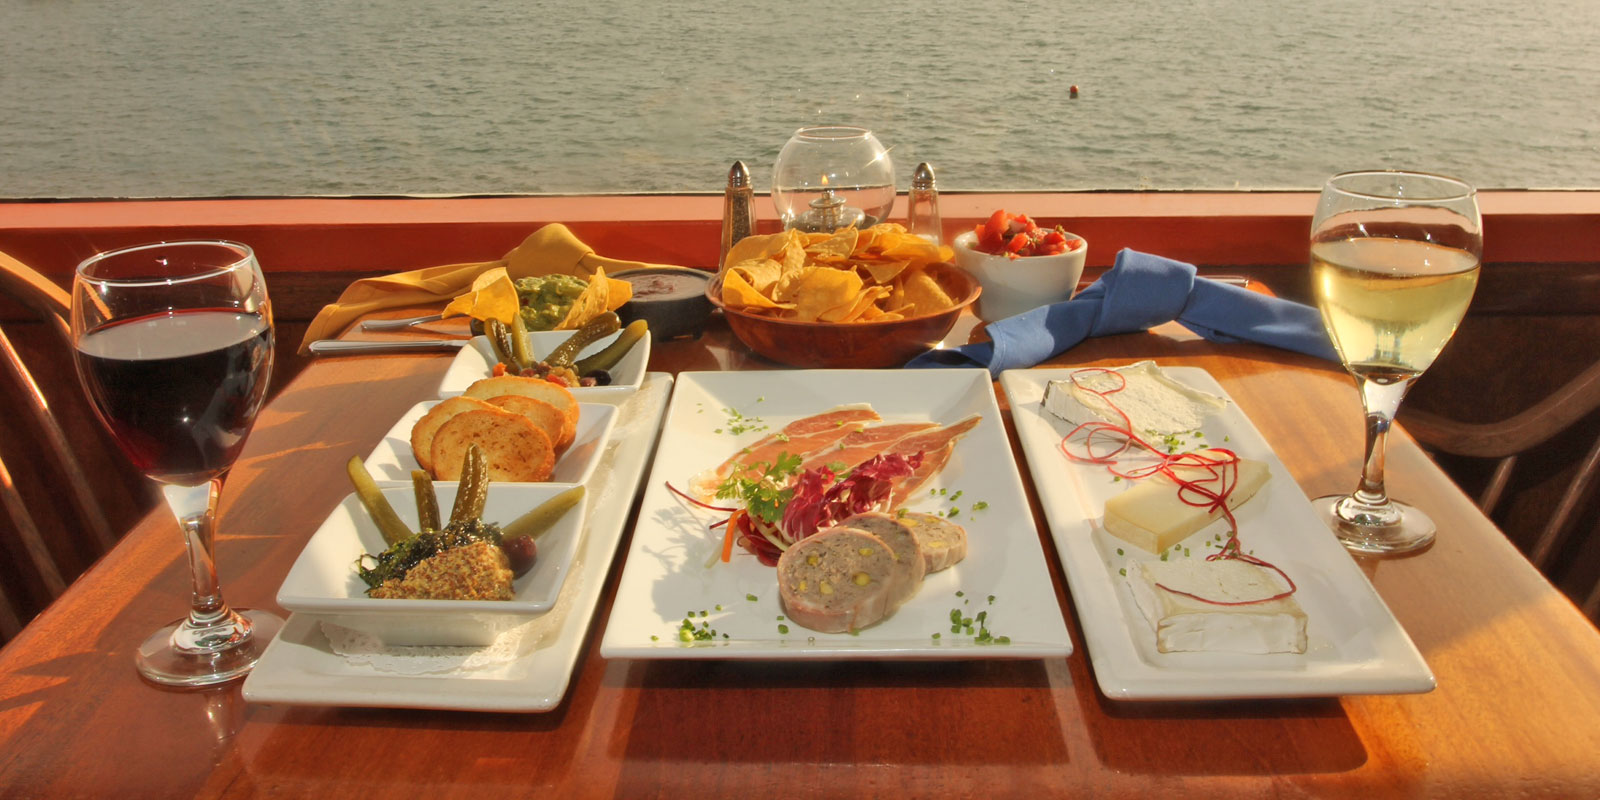 Ocean Views and 'Cali-Mex' Cuisine Fuel Olitas Cantina and